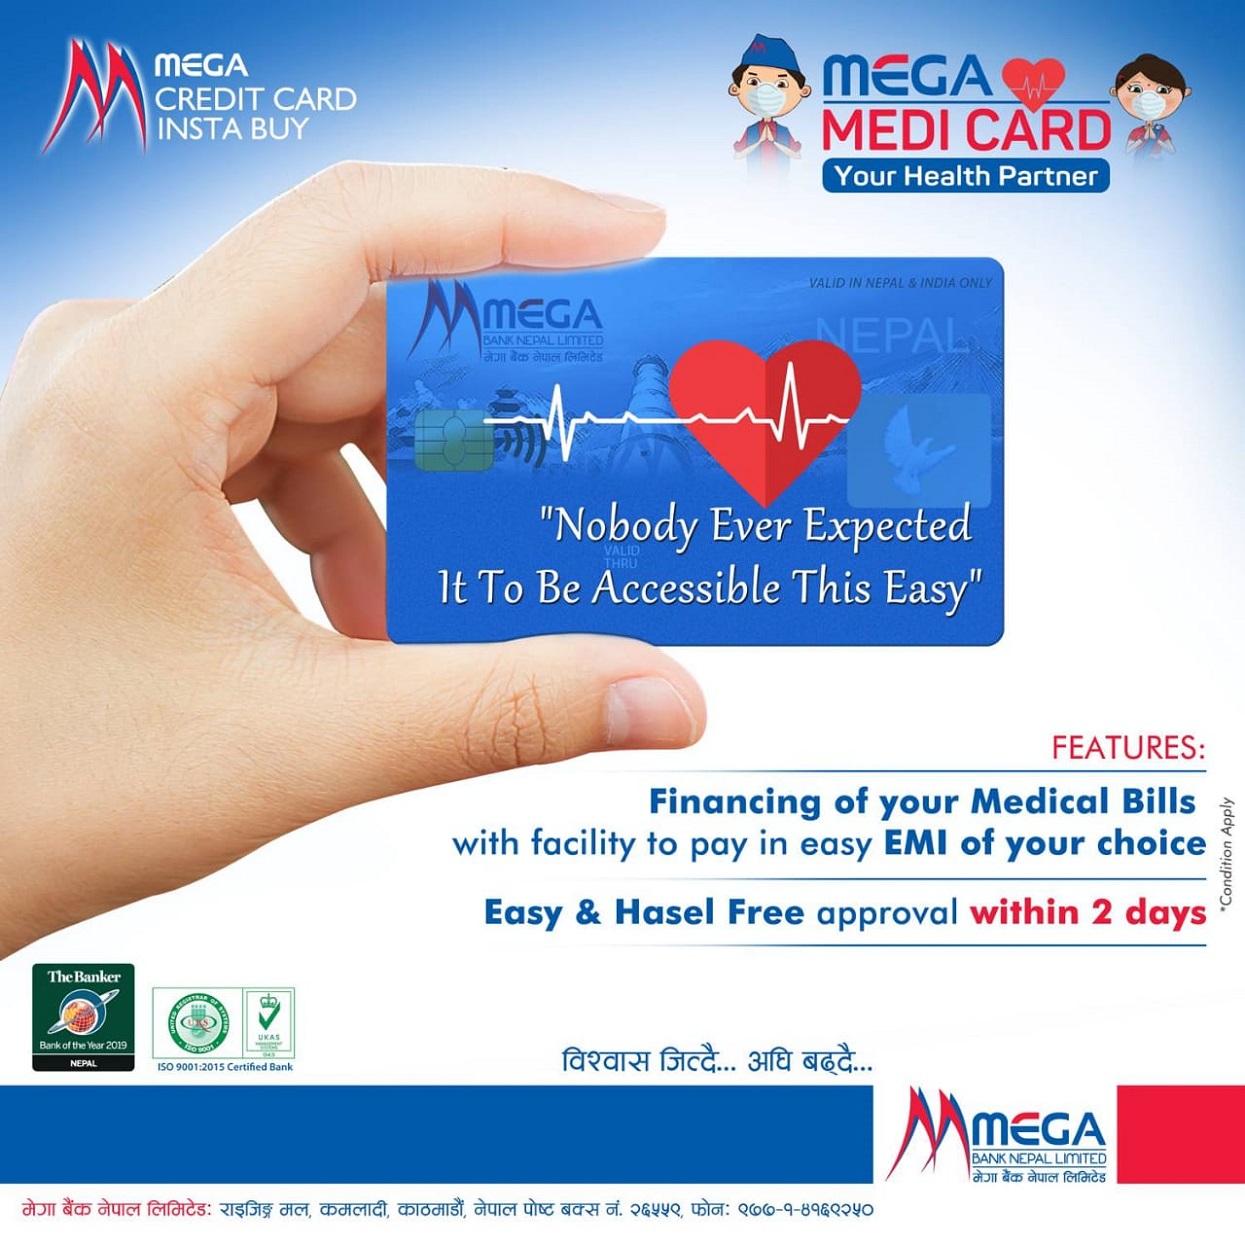 Mega Bank has introduced ‘Mega Medi Card’ facility to pay hospital bills